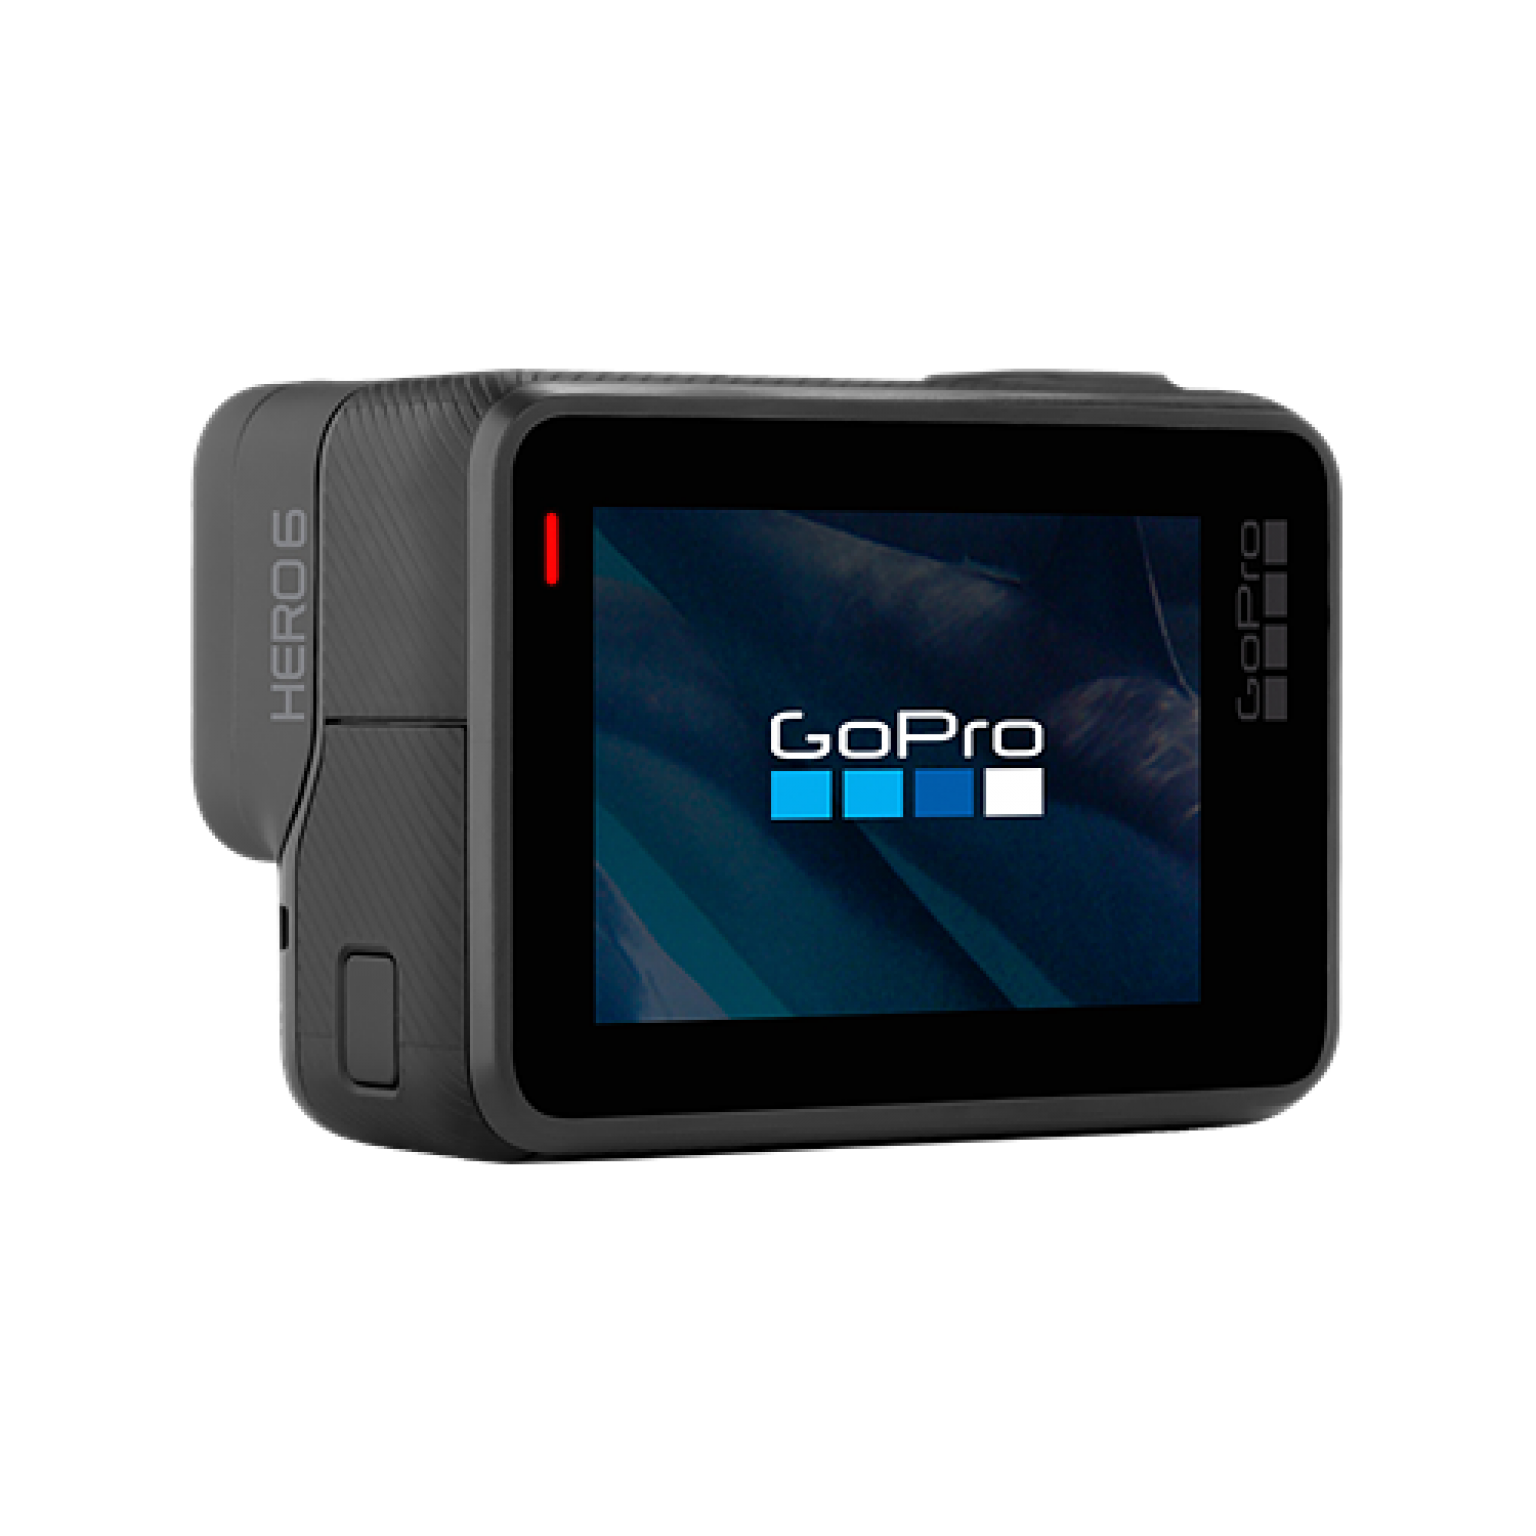 GoPro HERO6 Back side